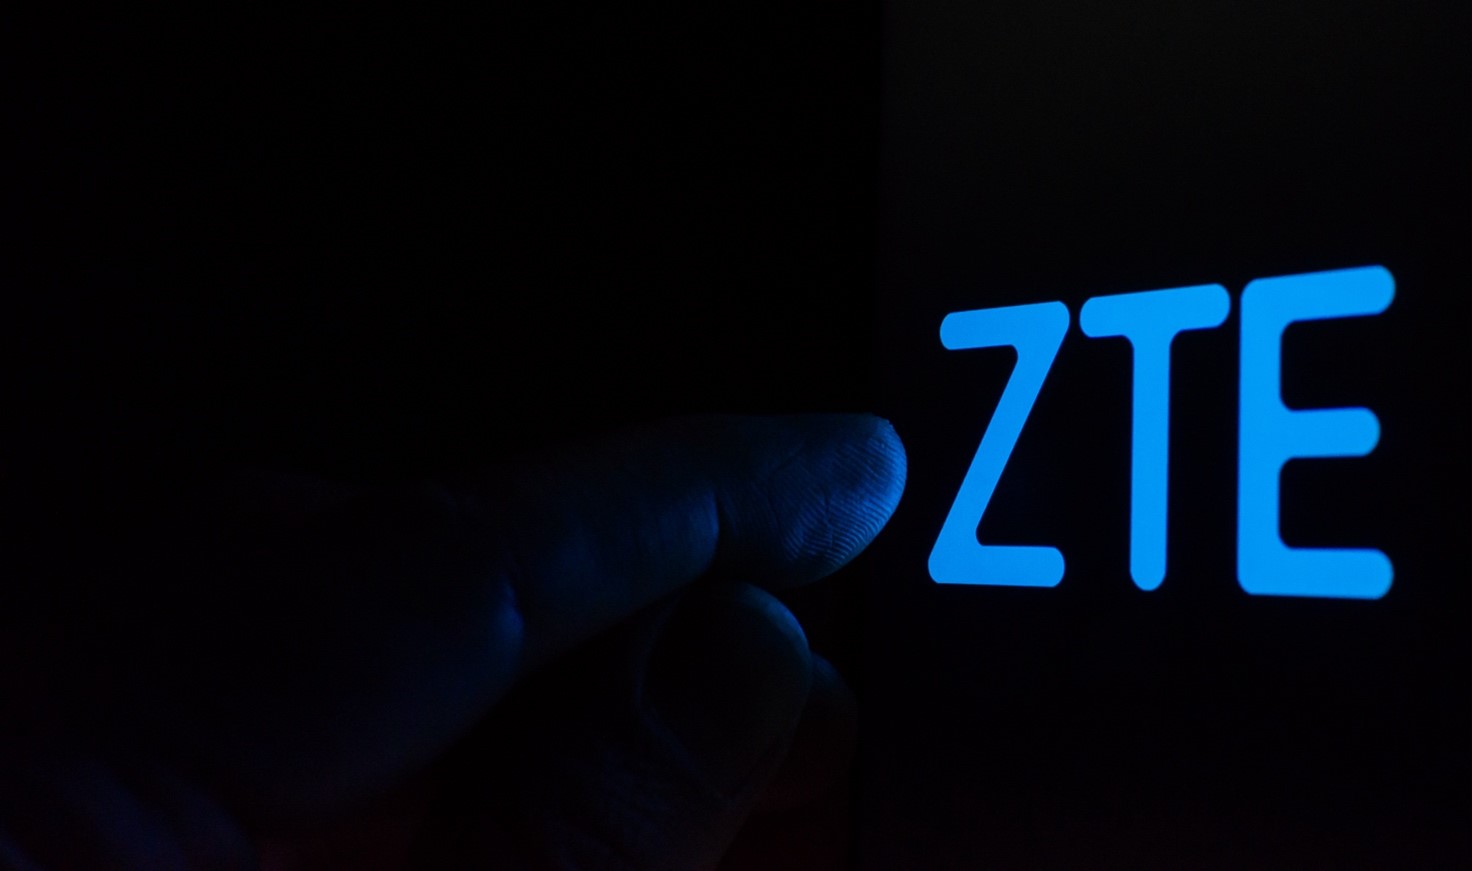 ZTE: Telecommunications, Innovation and Development